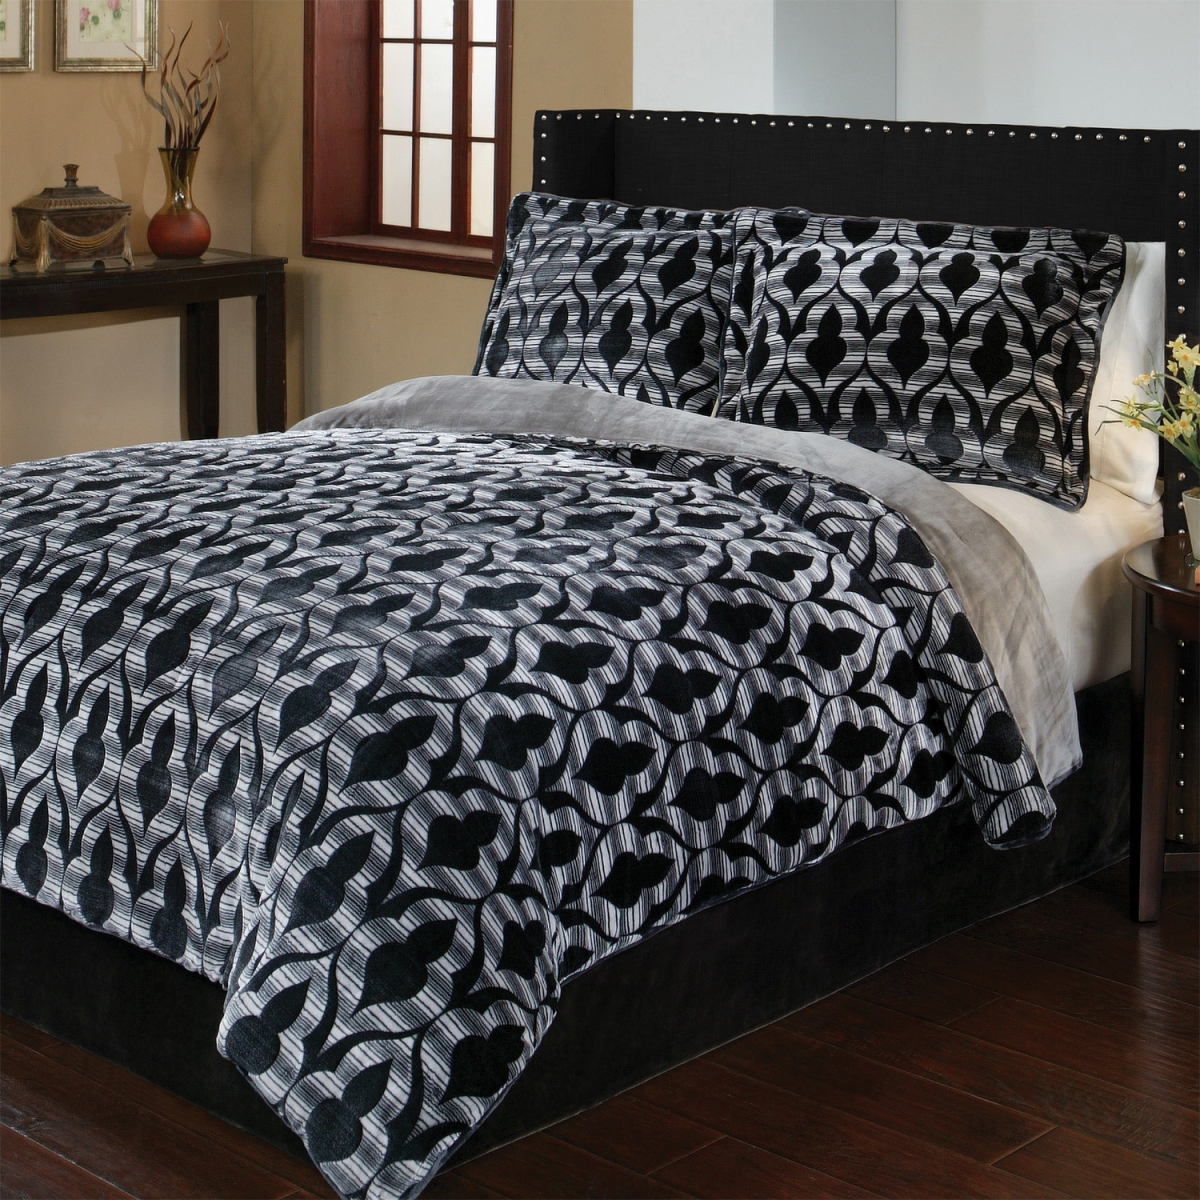 C1409004-syq-blk 90 X 90 In. Reversible Merekesh Printed Velvet Plush Comforter Mini Set, Black - Queen